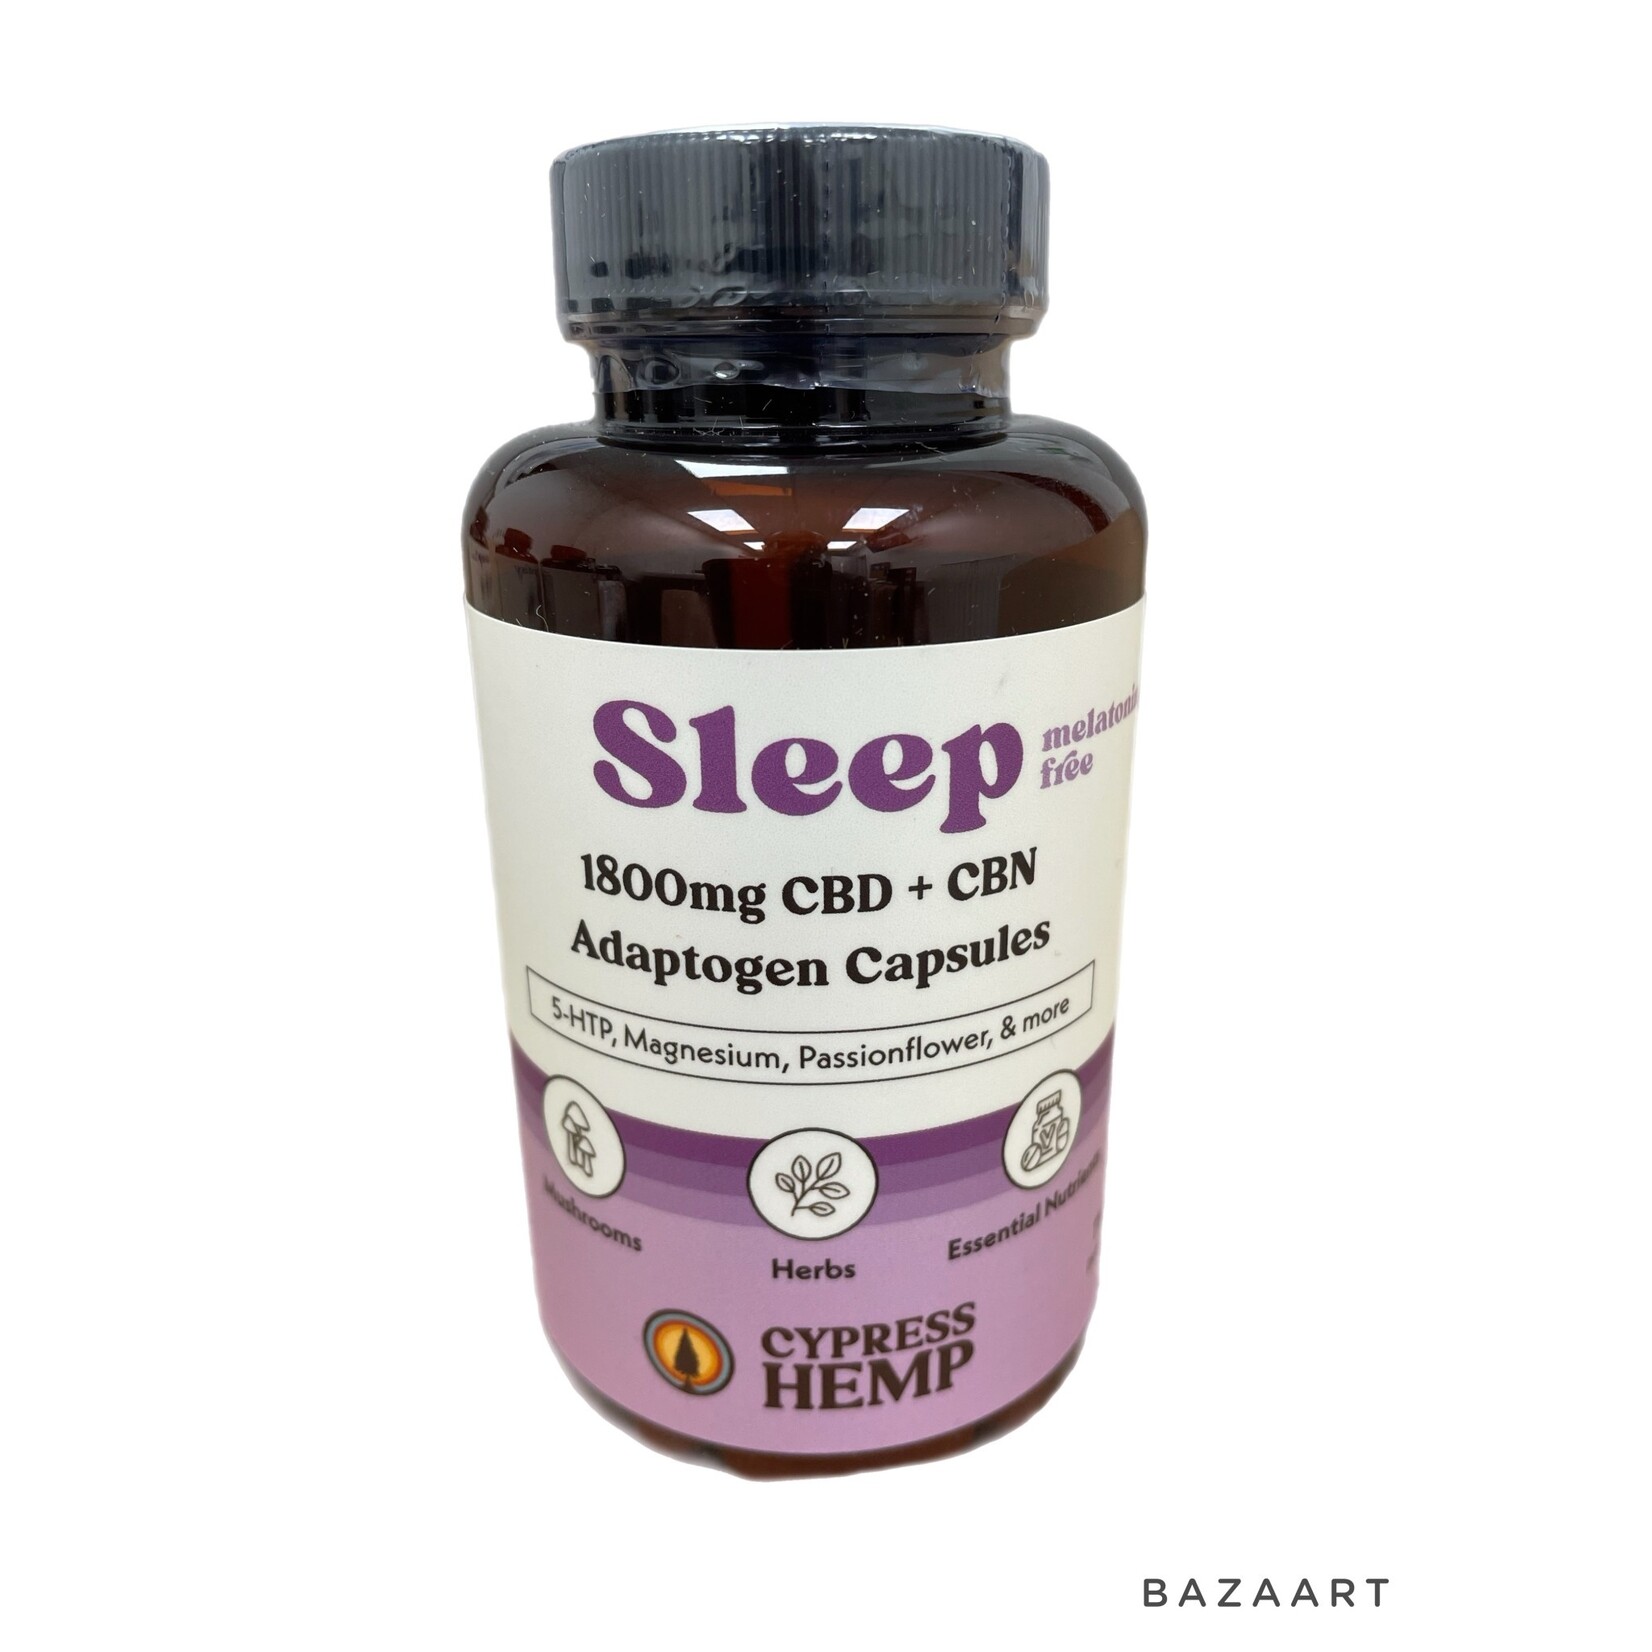 Cypress Hemp Cypress Hemp 1800mg CBD + Adaptogen Capsules SLEEP 5 HTP